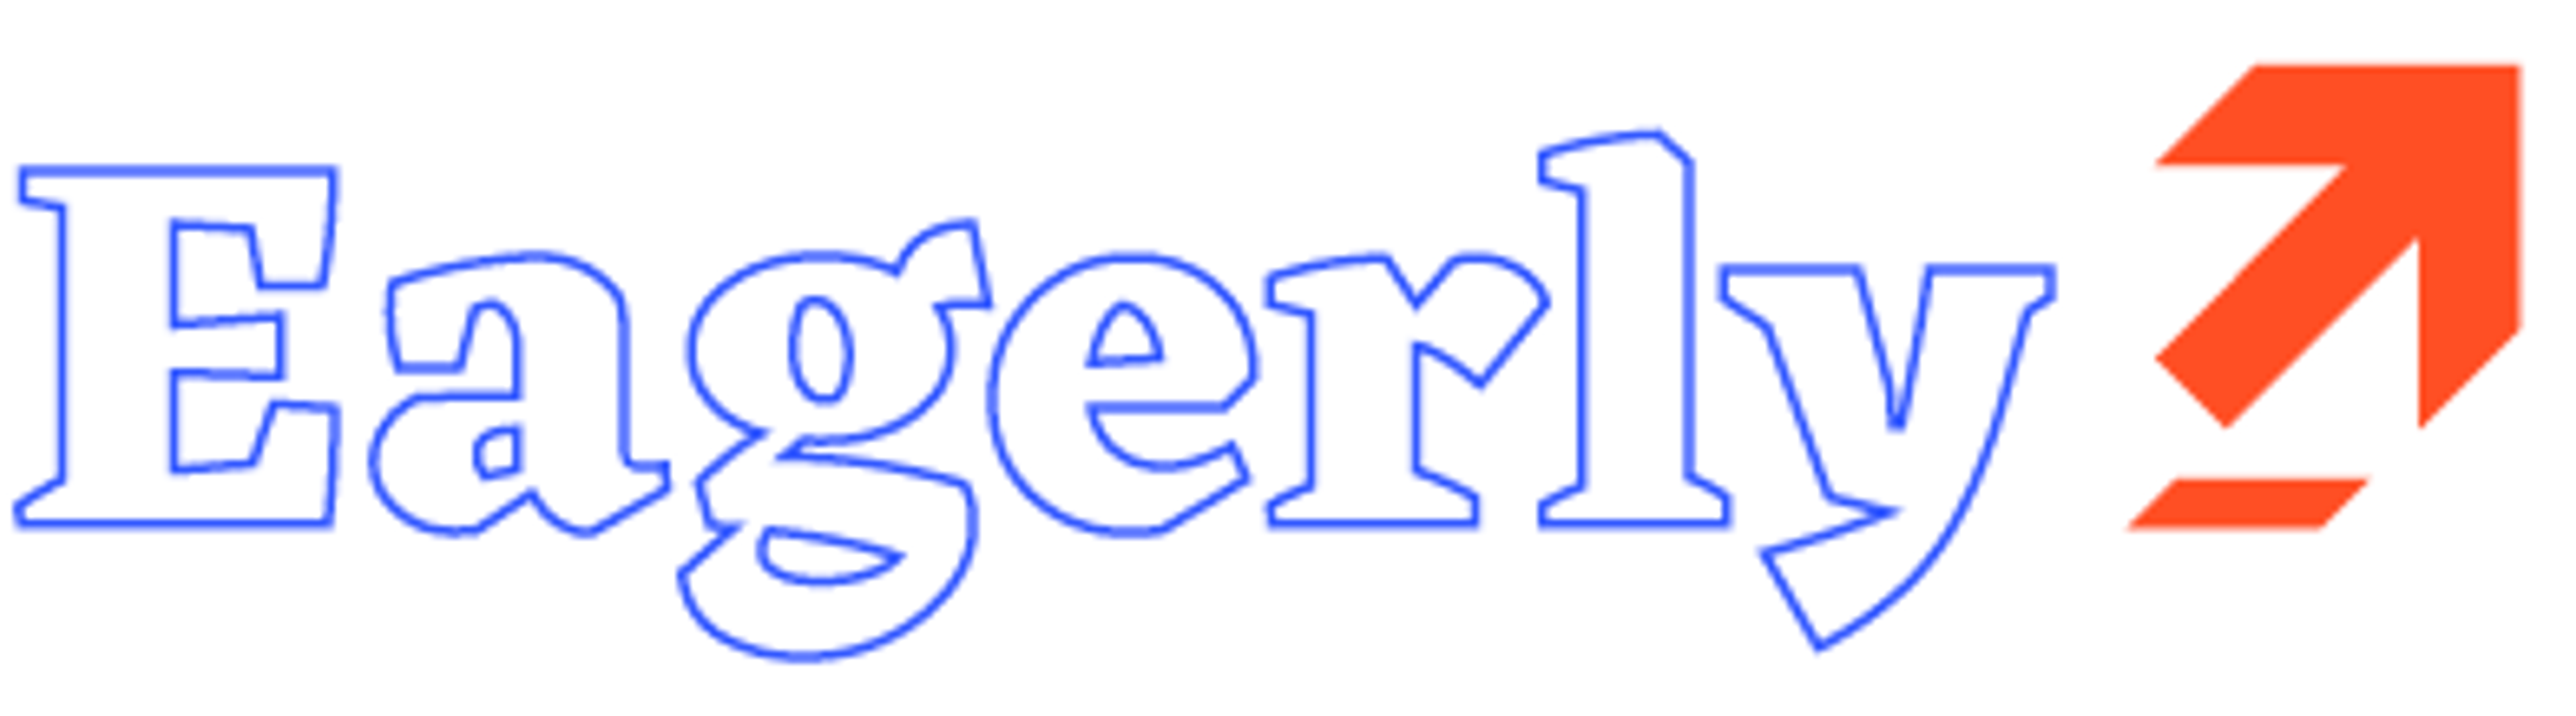 Eagerly Wordpress Plugin logo